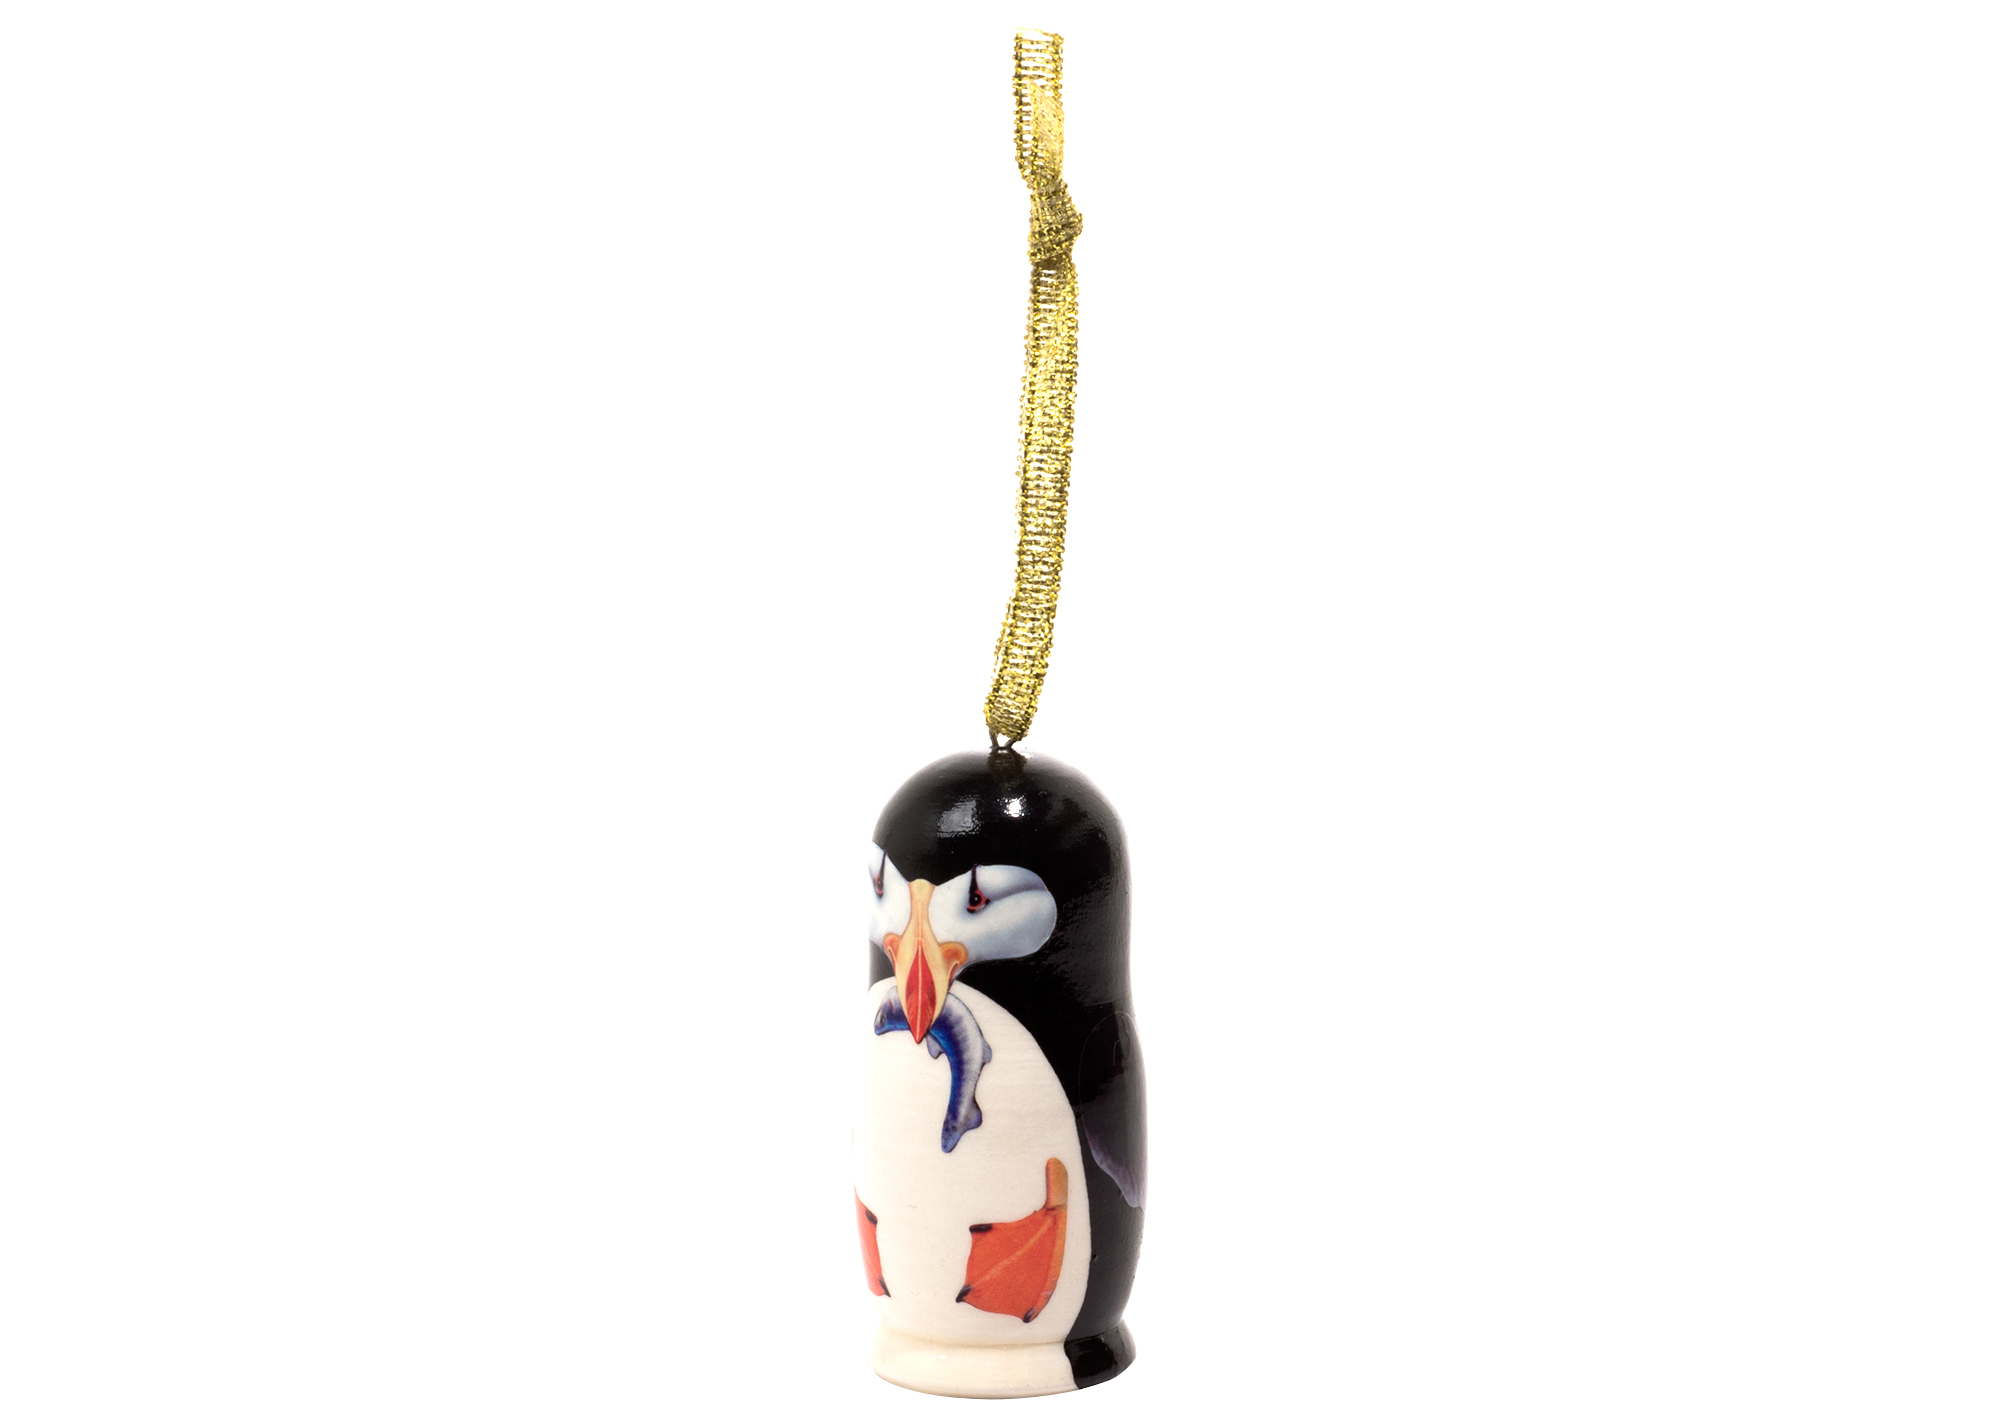 Buy Puffin Mini Realistic Ornament 2" at GoldenCockerel.com